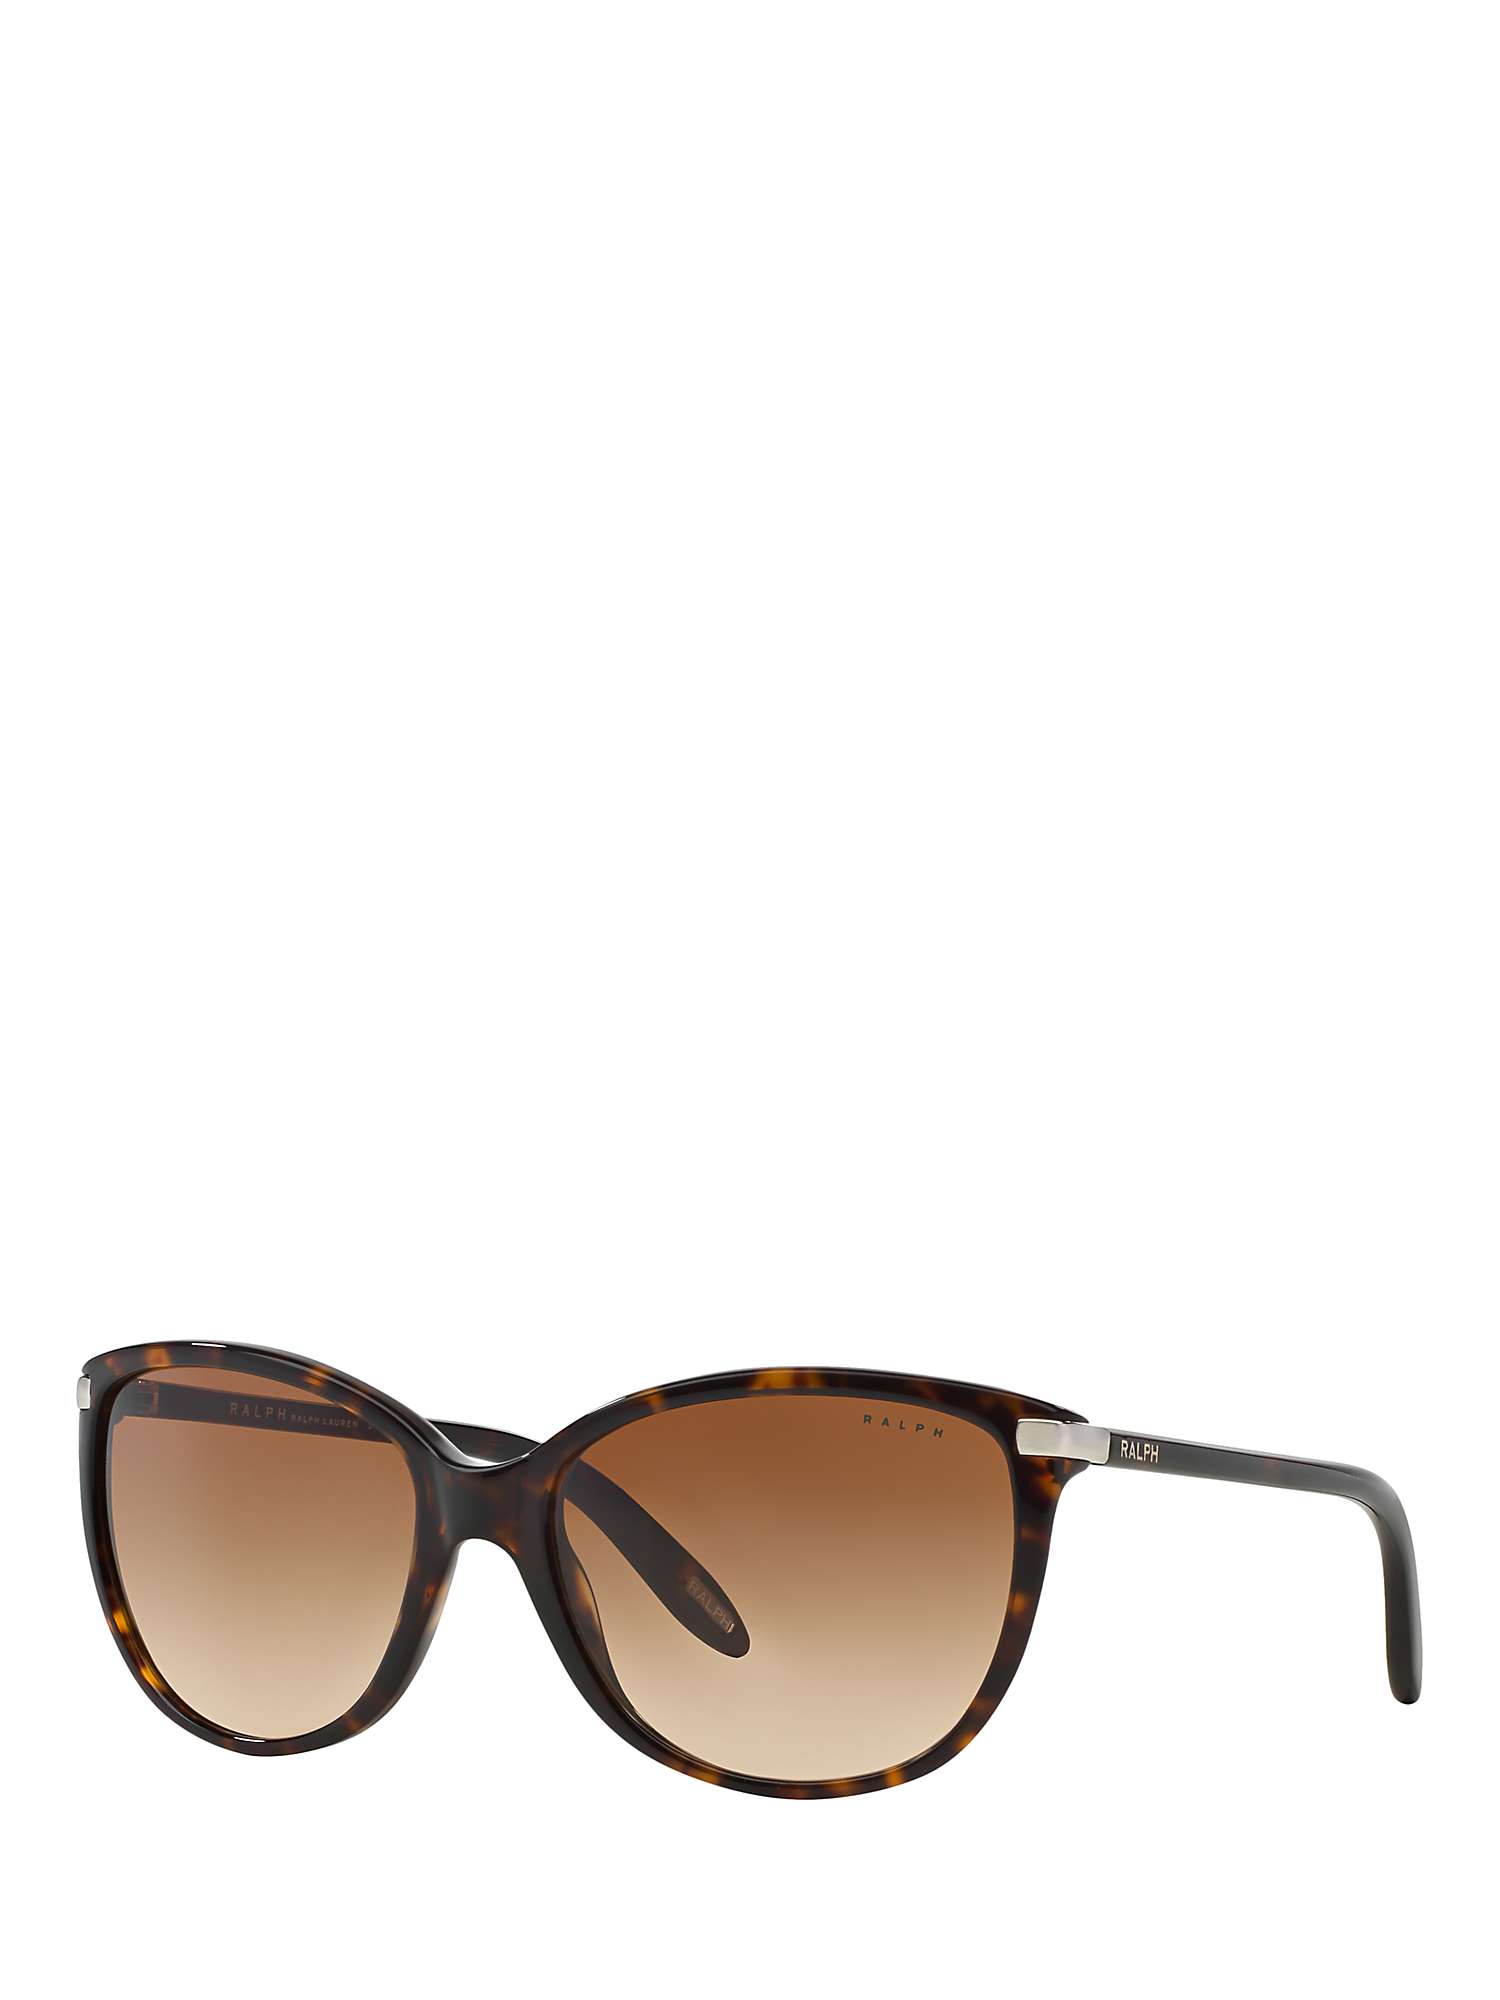 Buy Polo Ralph Lauren RA5160 Women's Cat's Eye Sunglasses, Dark Tortoise/Brown Gradient Online at johnlewis.com